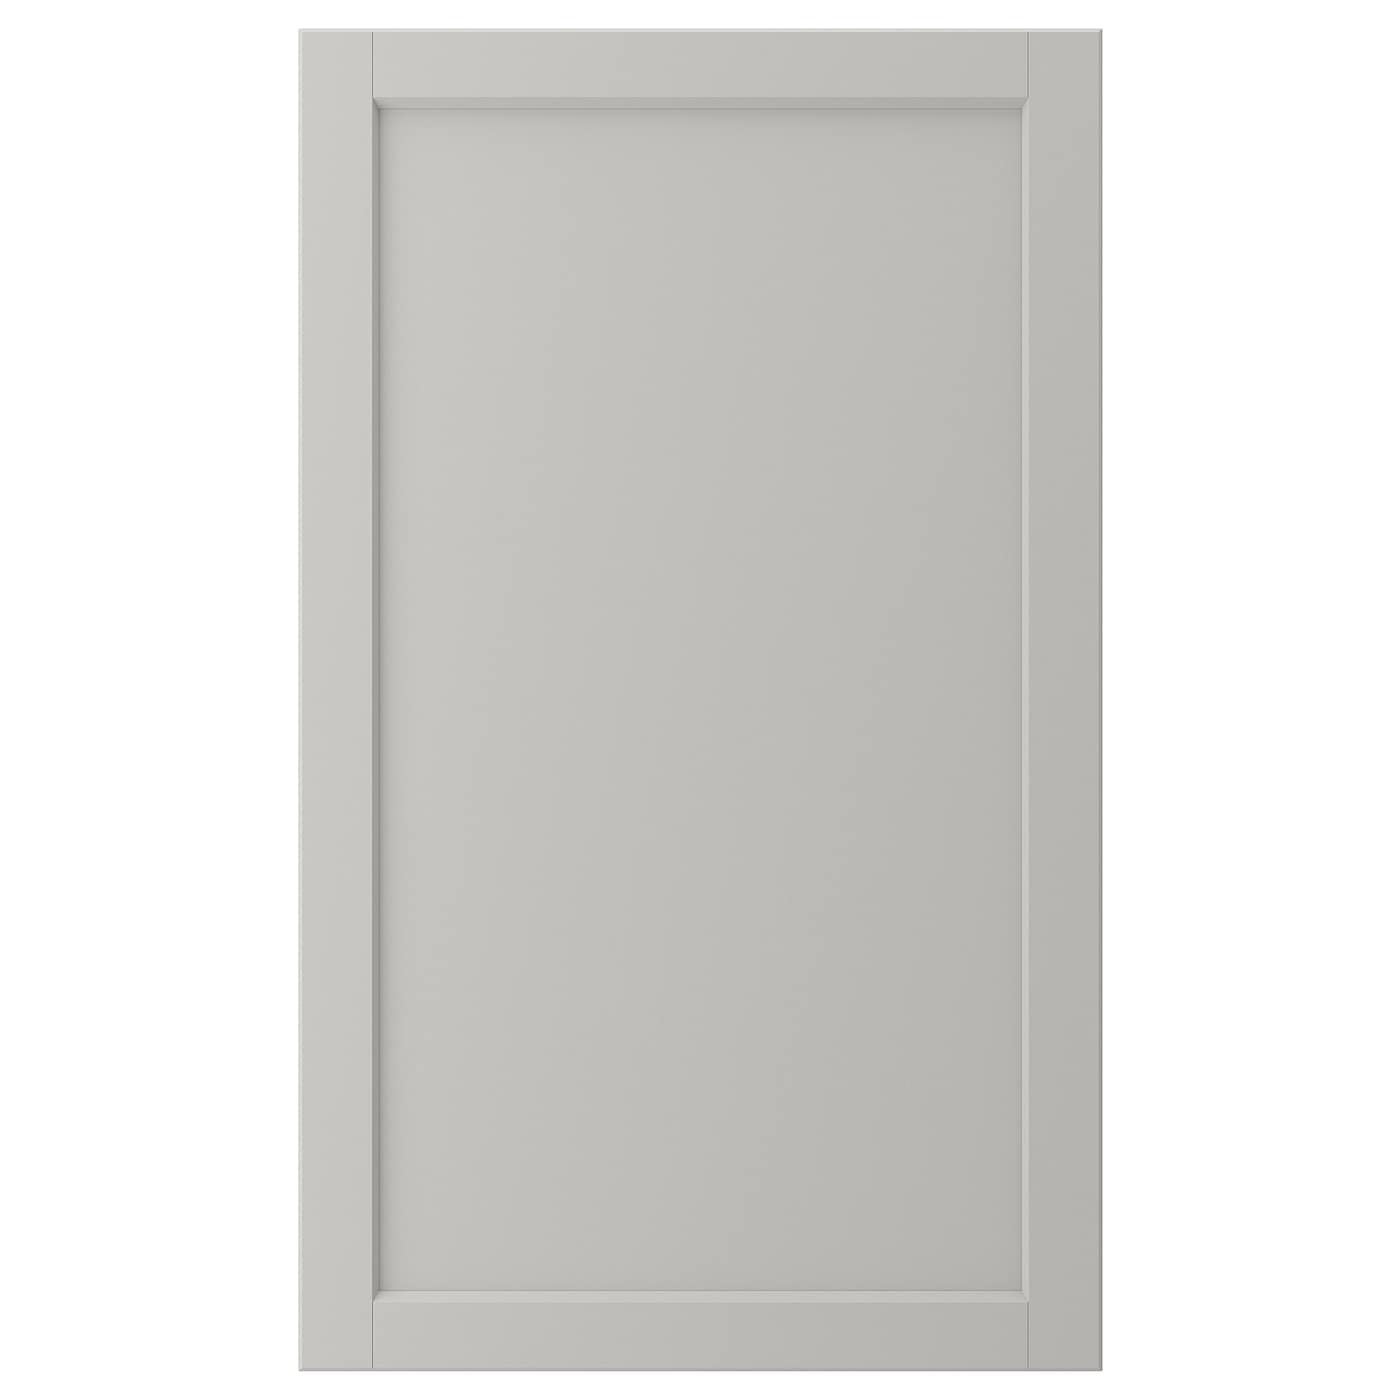 Дверца - IKEA LERHYTTAN, 100х60 см, светло-серый, ЛЕРХЮТТАН ИКЕА